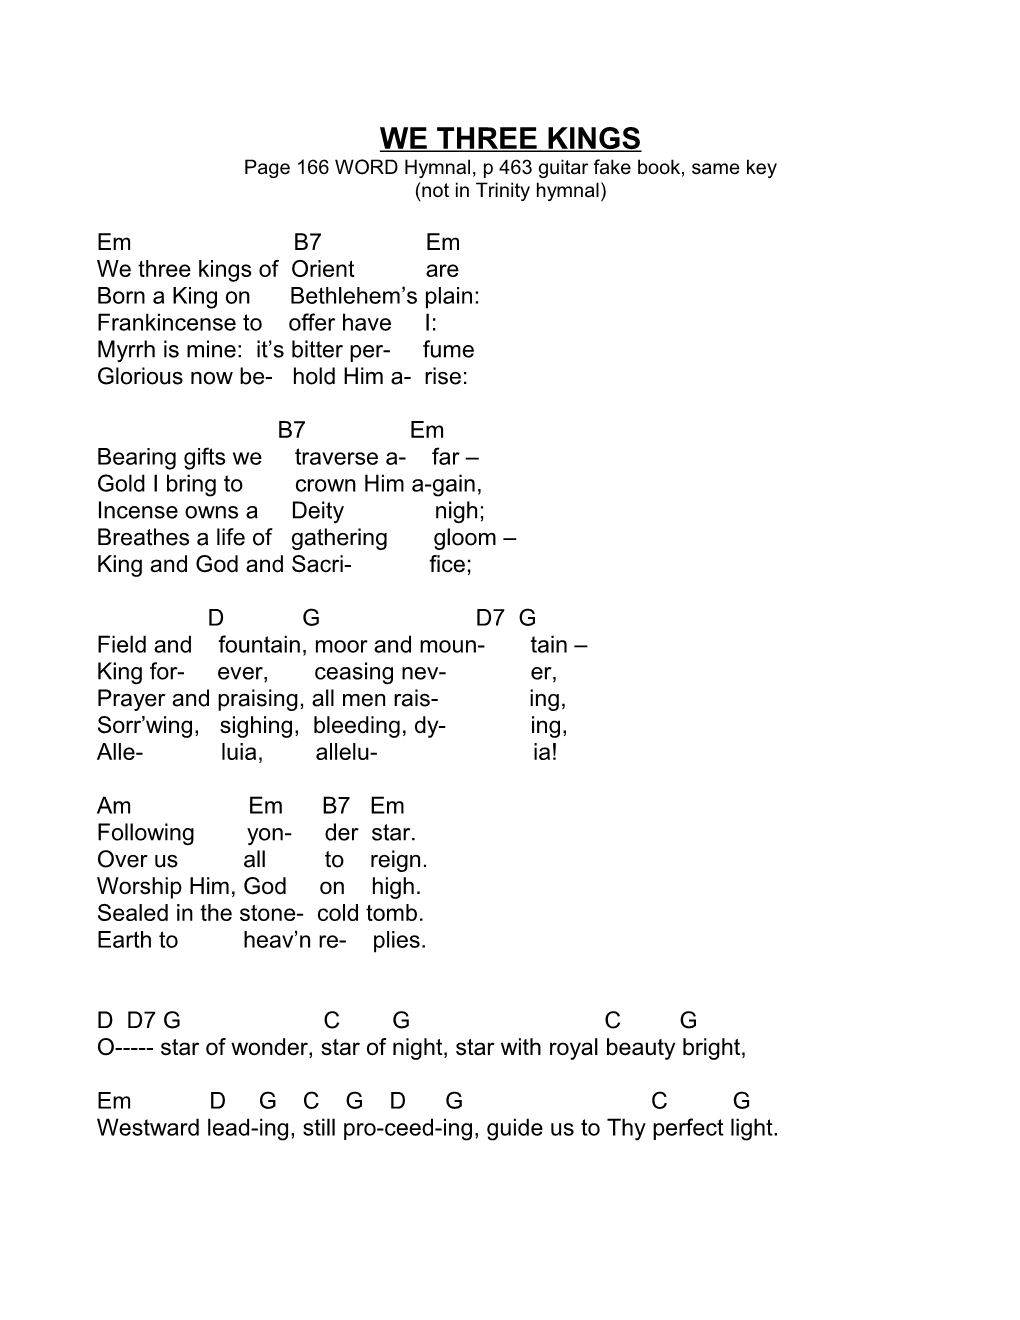 Page 166 WORD Hymnal, P 463 Guitar Fake Book, Same Key